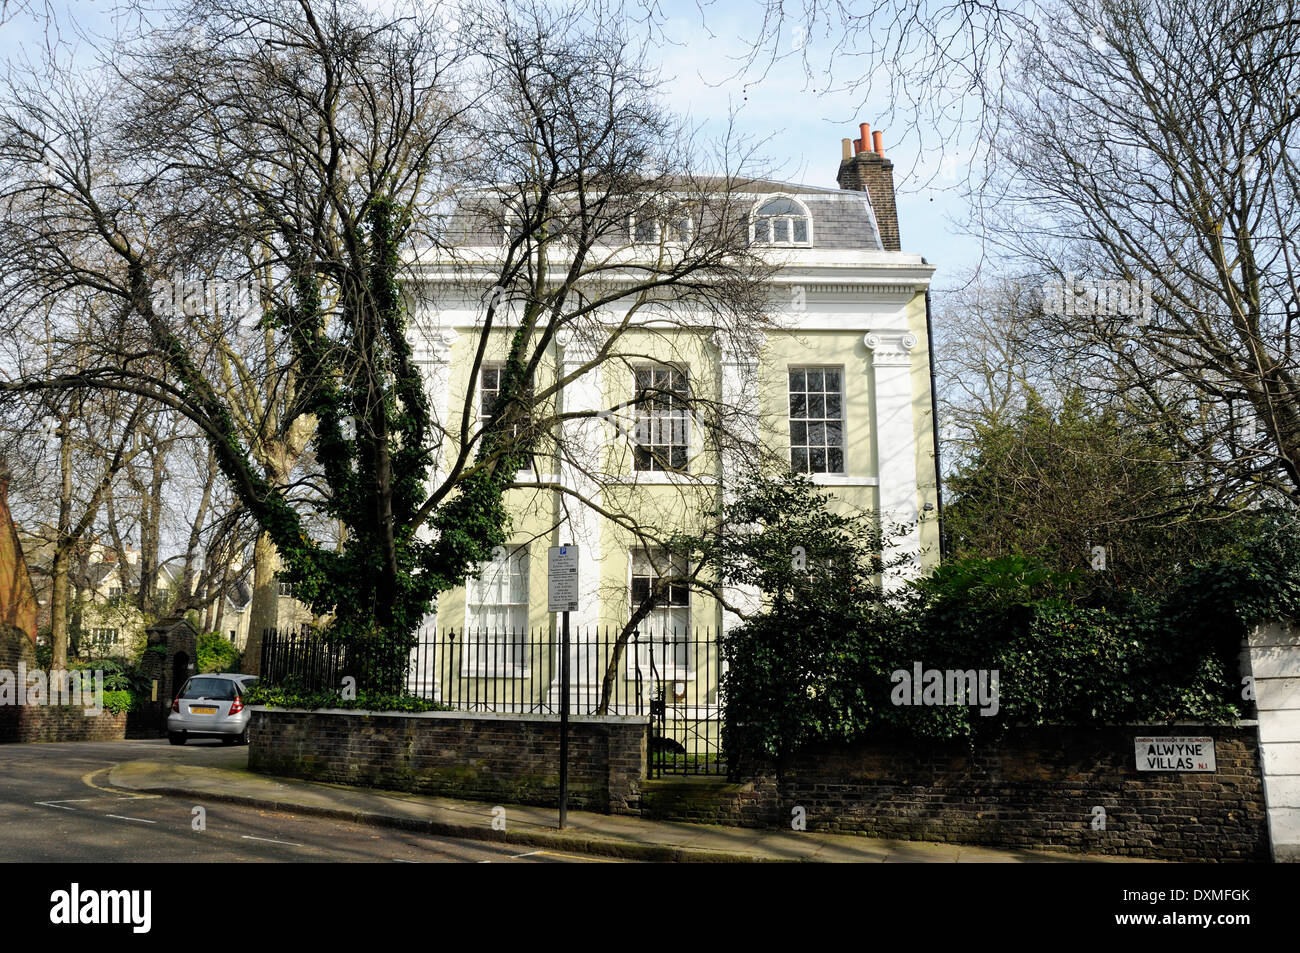 Detached town house, Alwyne Villas, Canonbury, London Borough of Islington England Britain UK Stock Photo